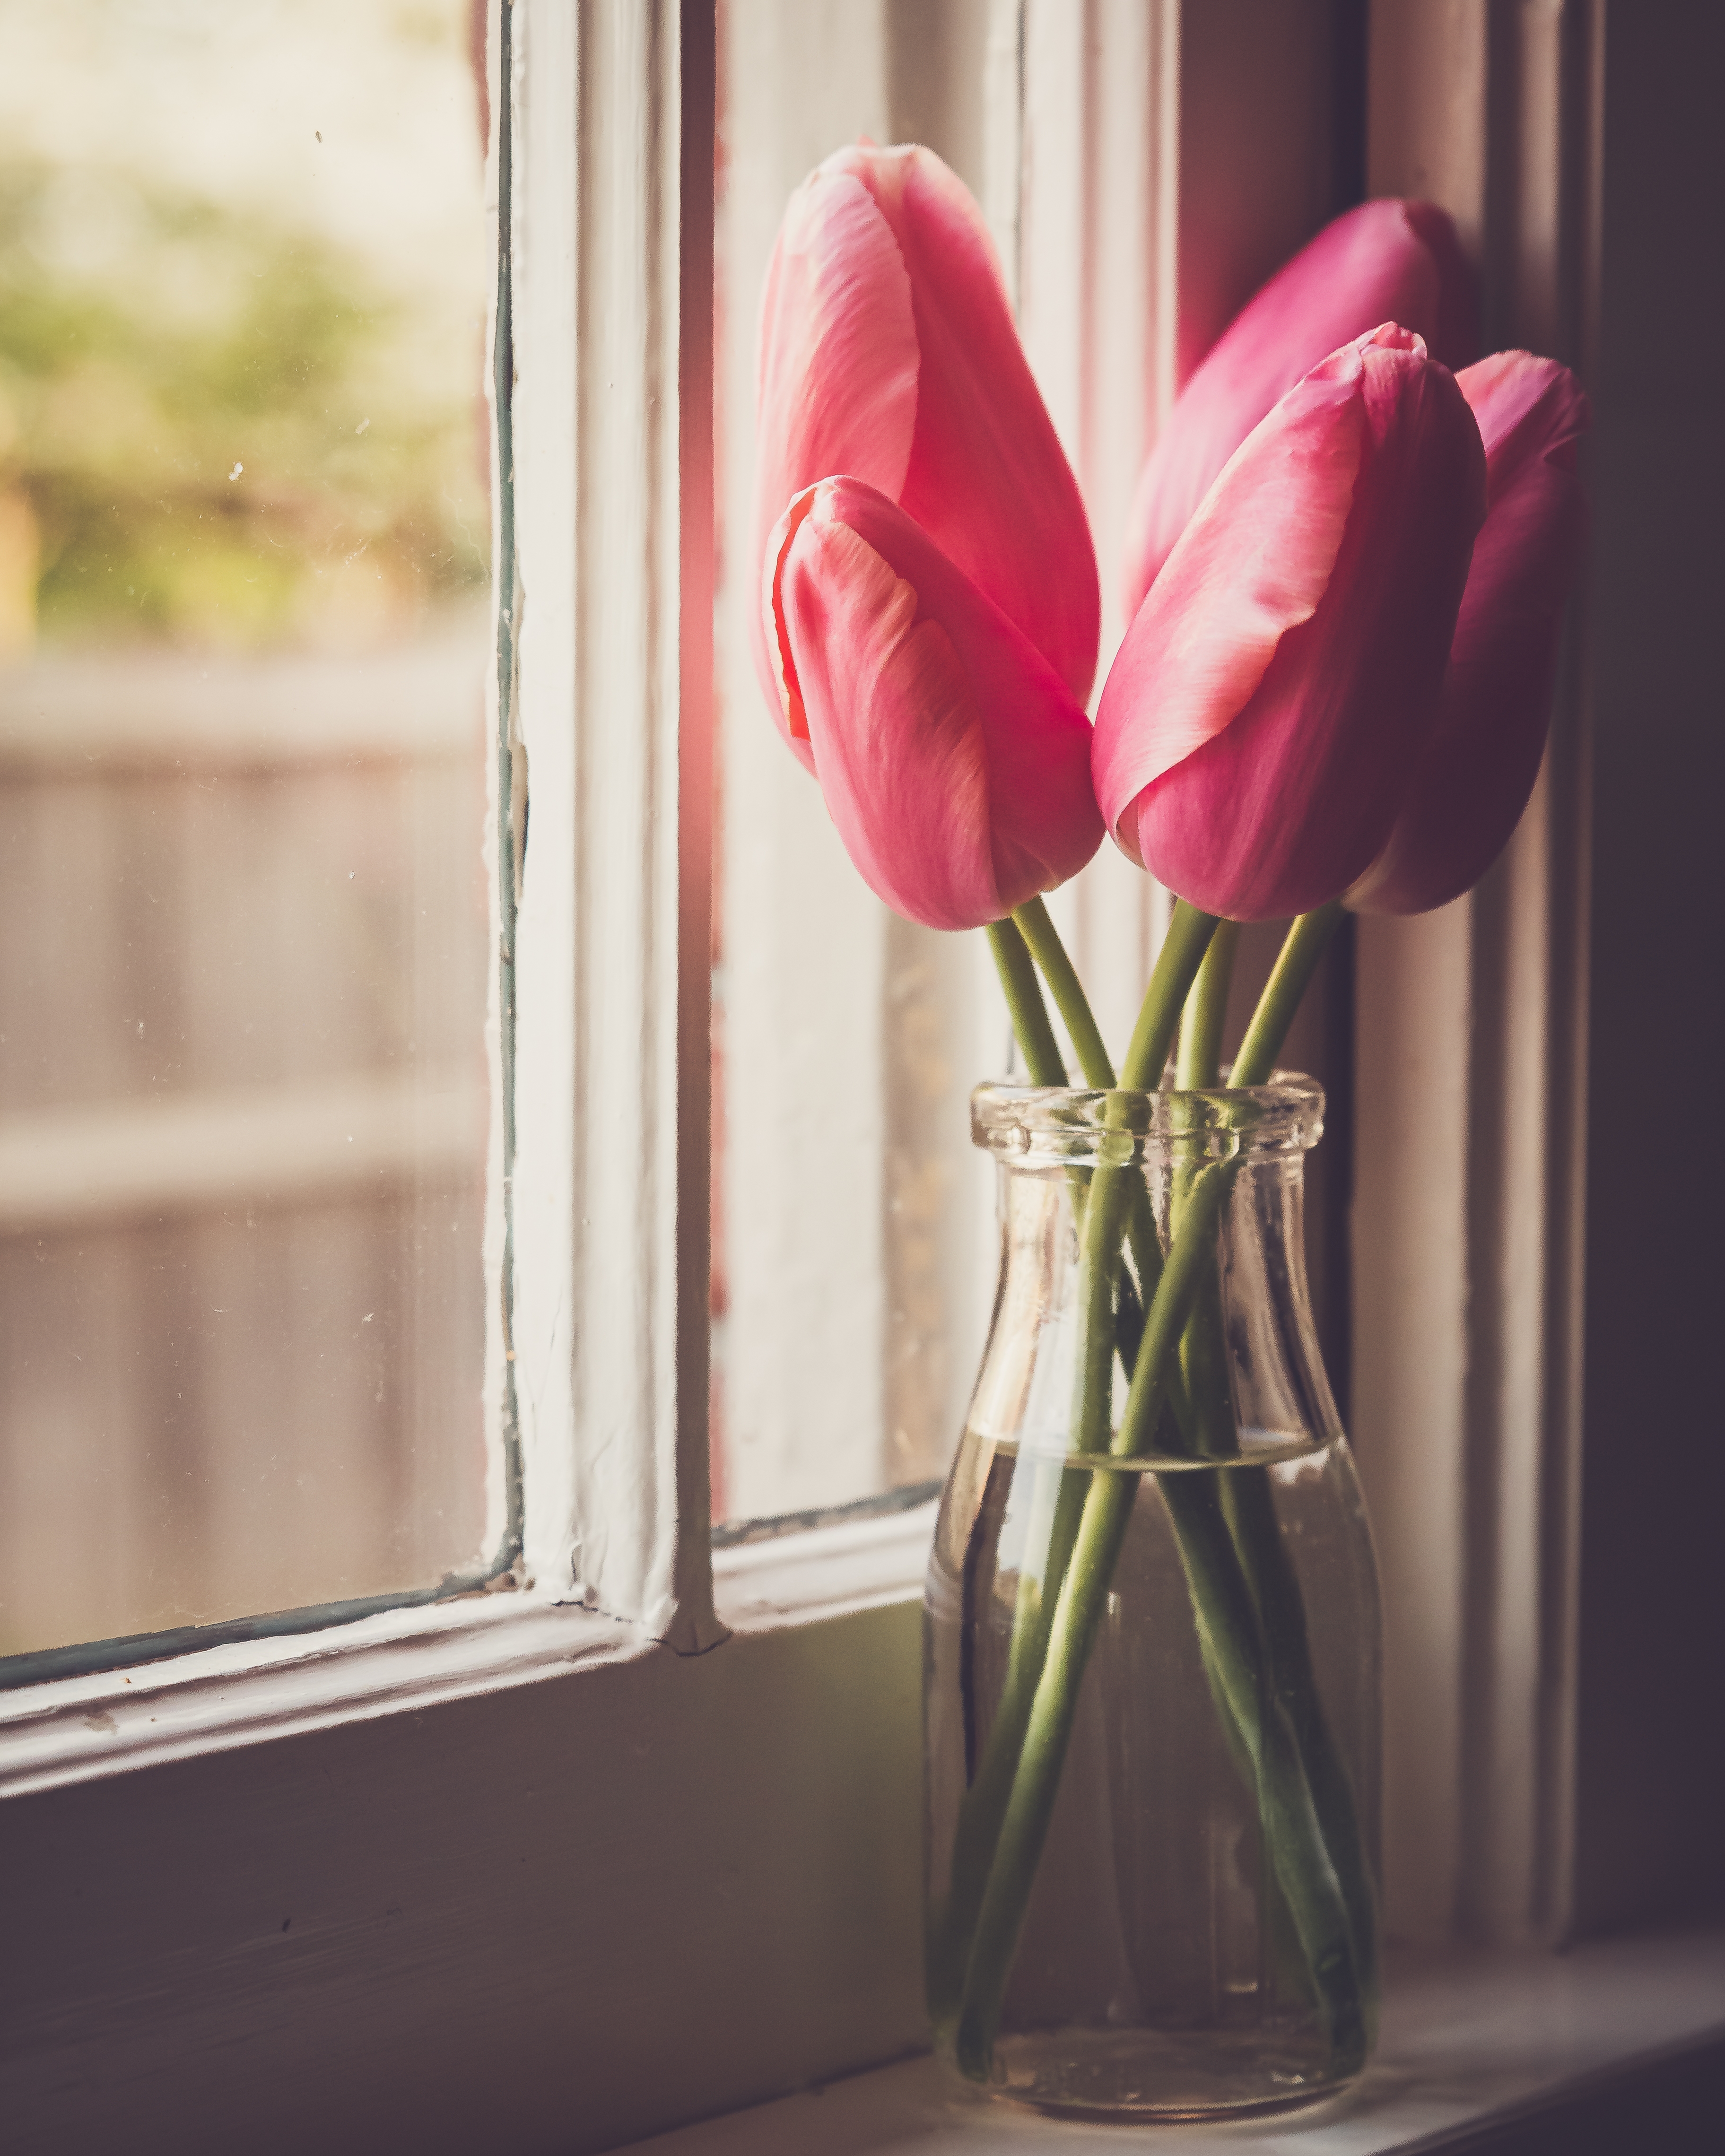 Photo free wallpaper pink tulips, pink flowers, pink tulips